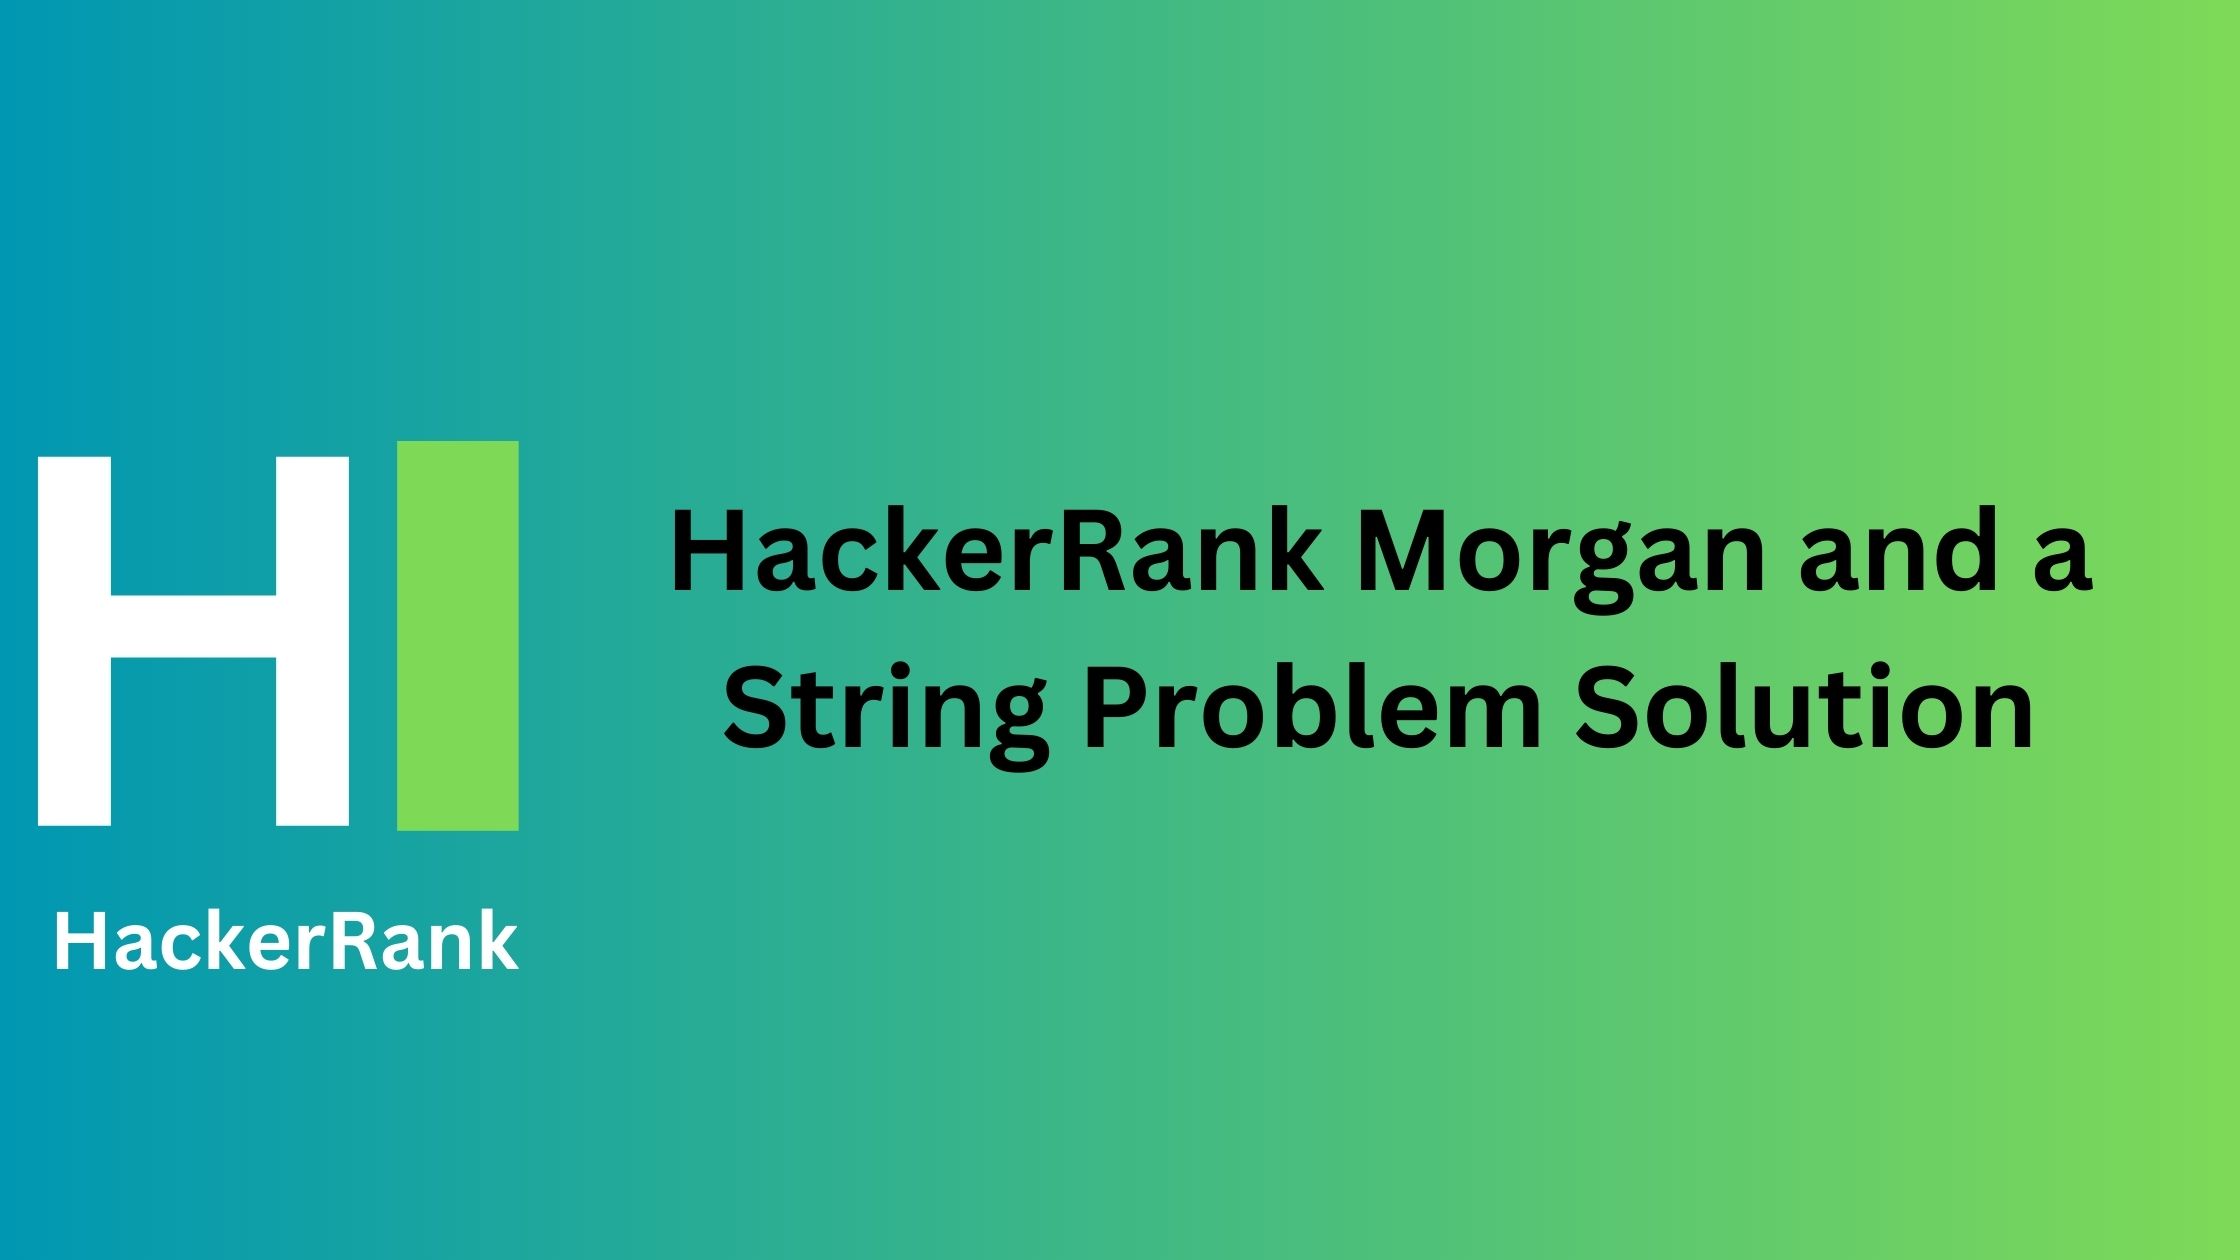 HackerRank Morgan and a String Problem Solution